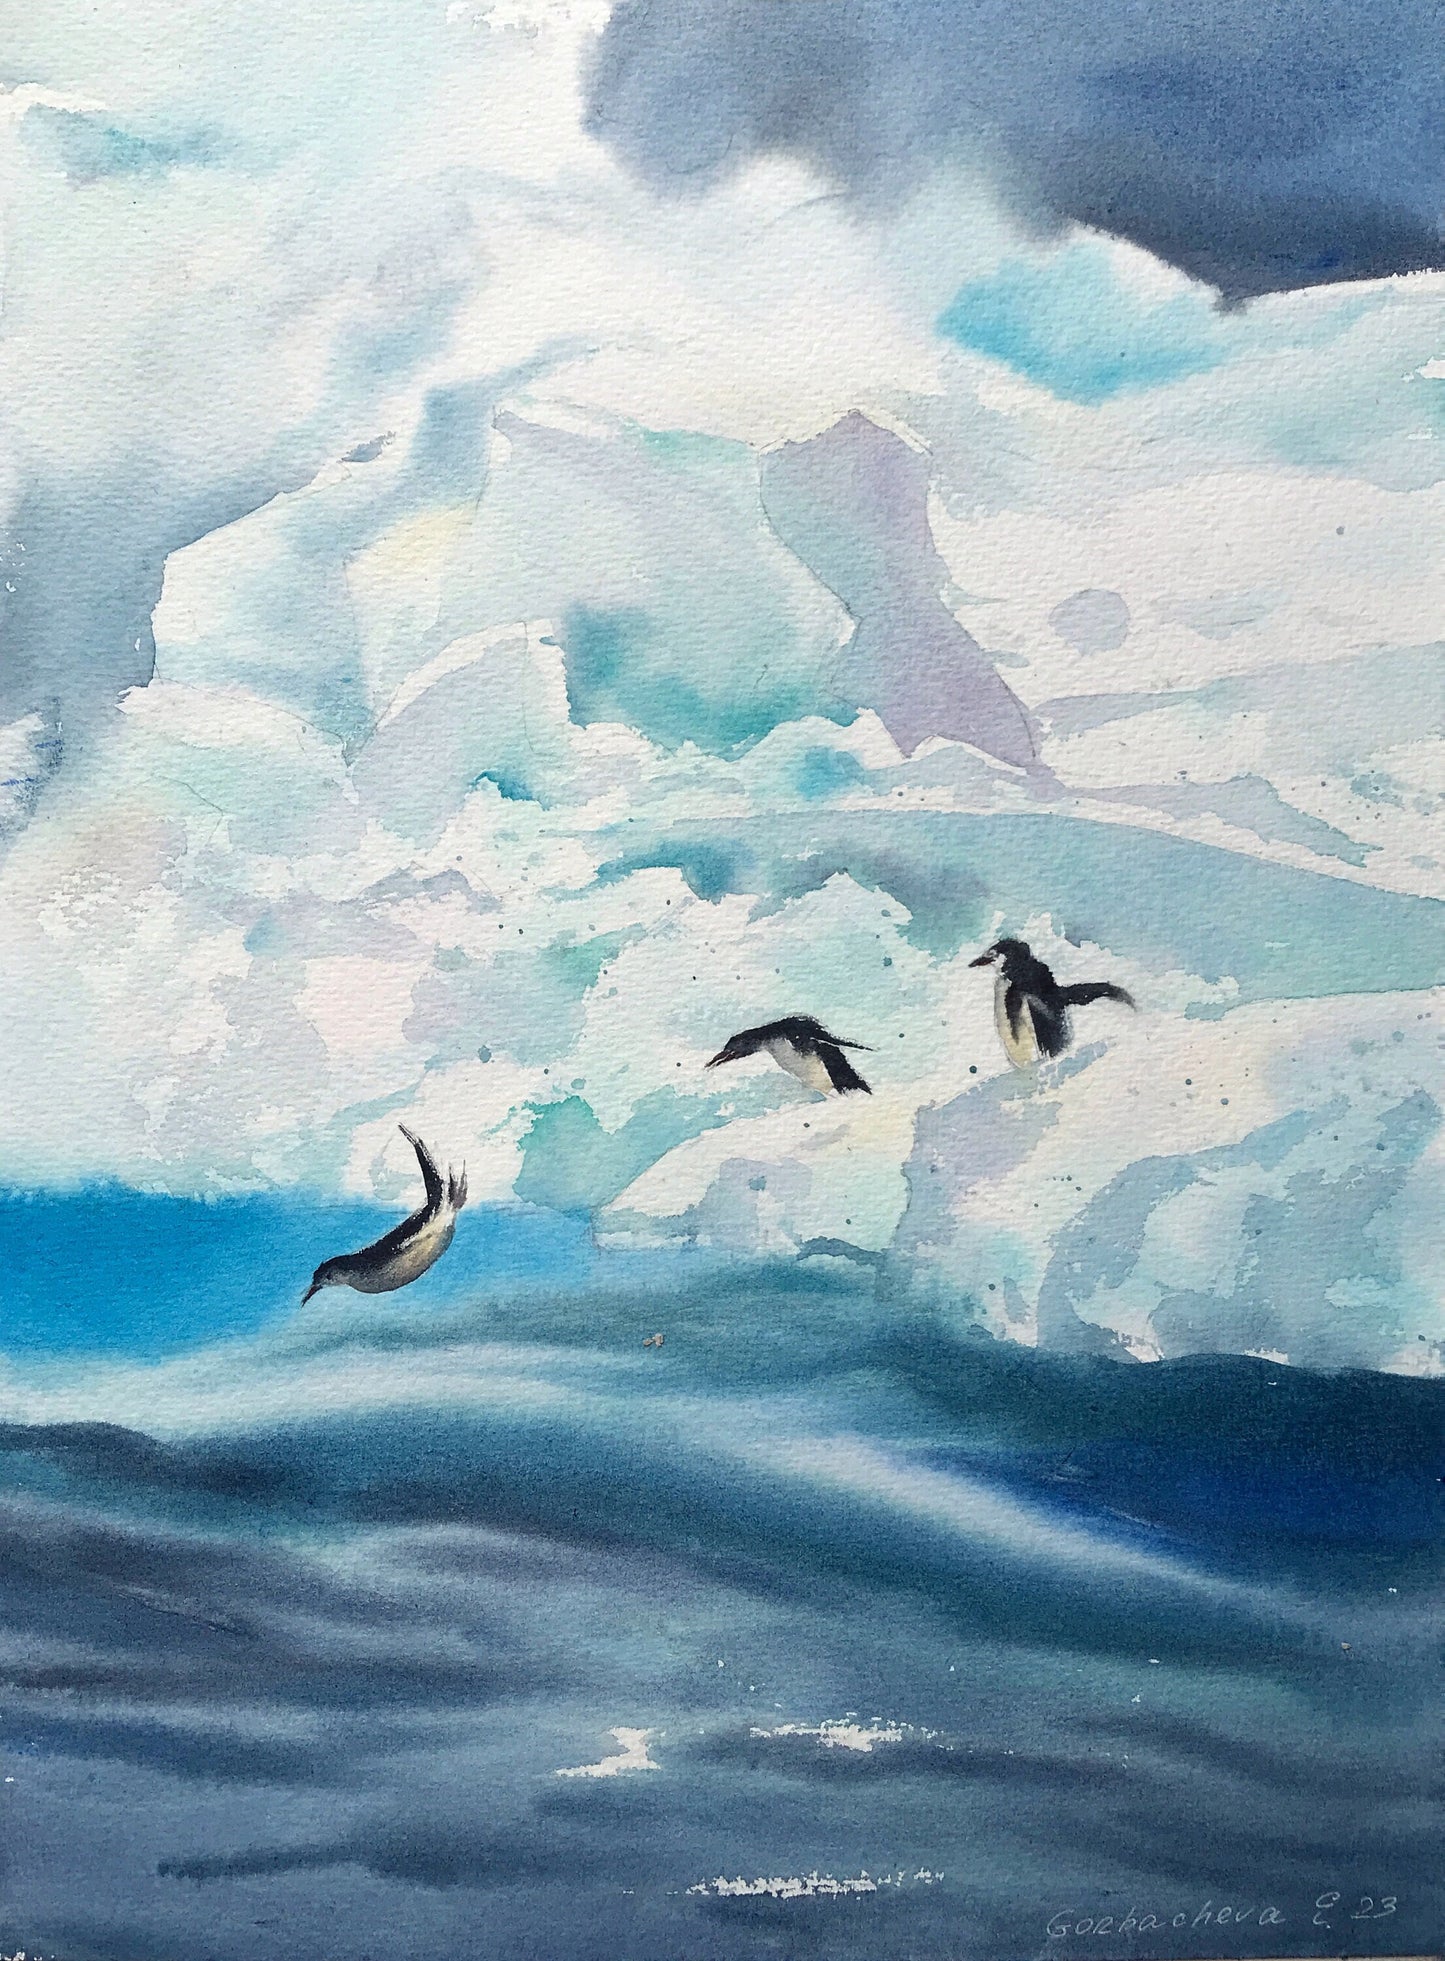 Antarctica Penguins Watercolor, Ice Painting Original, Iceberg Seascape, Explorer, Travel Adventure Art